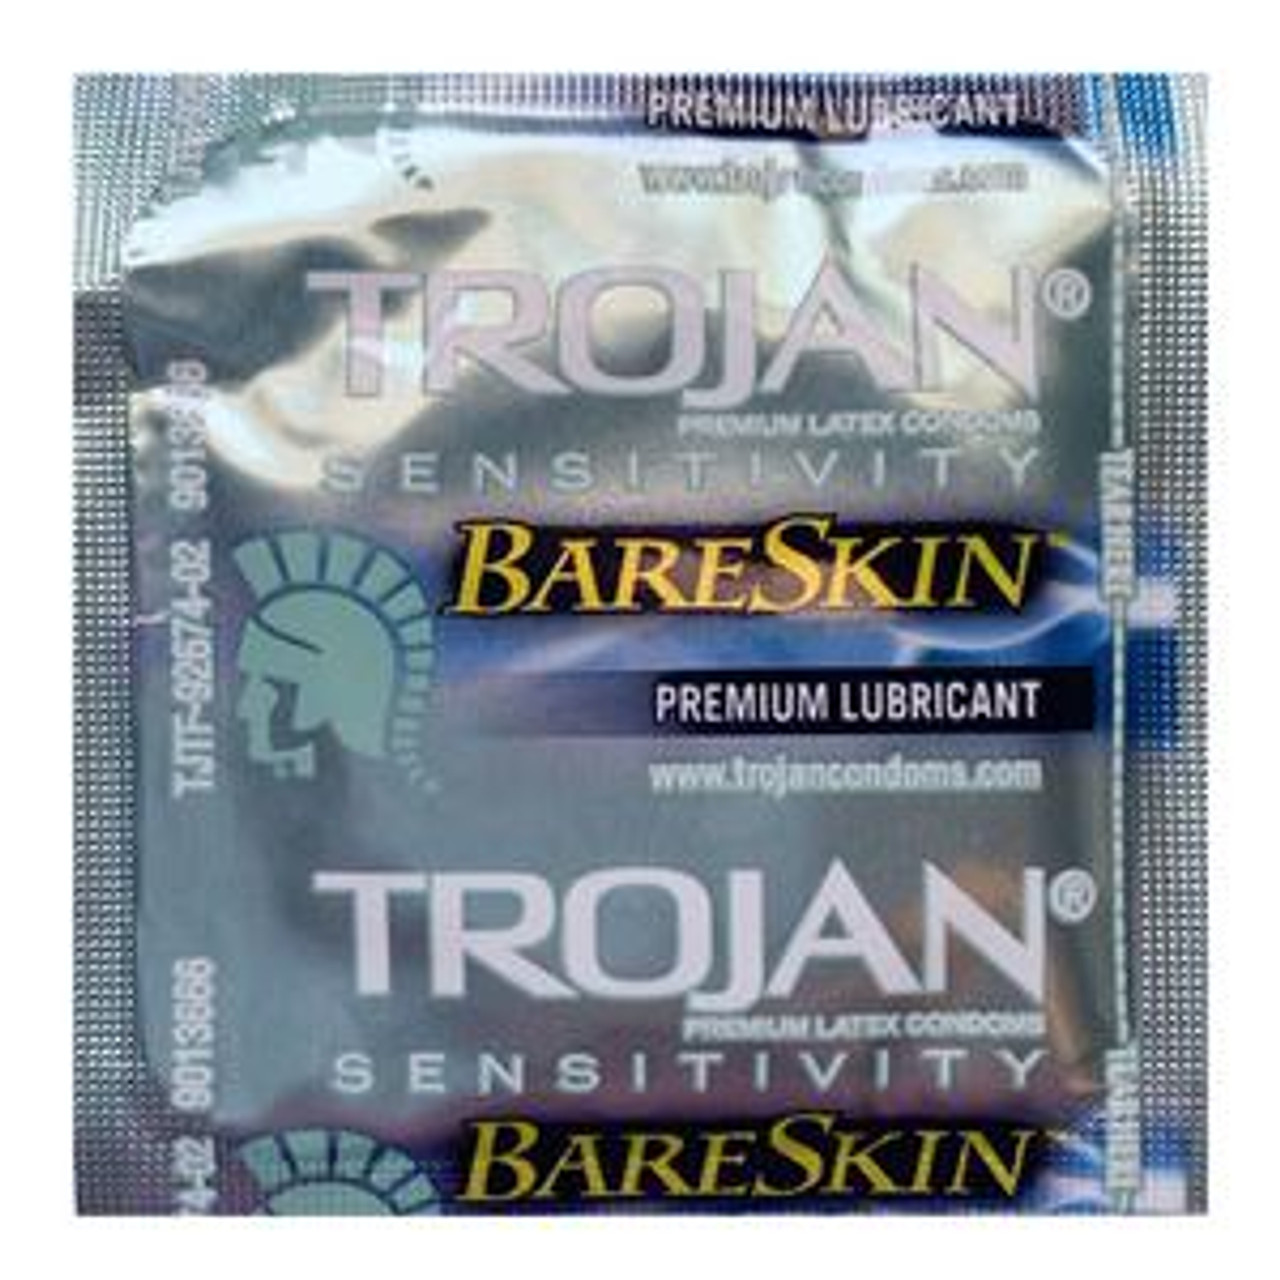 Trojan BareSkin Condoms  Ultra Thin –